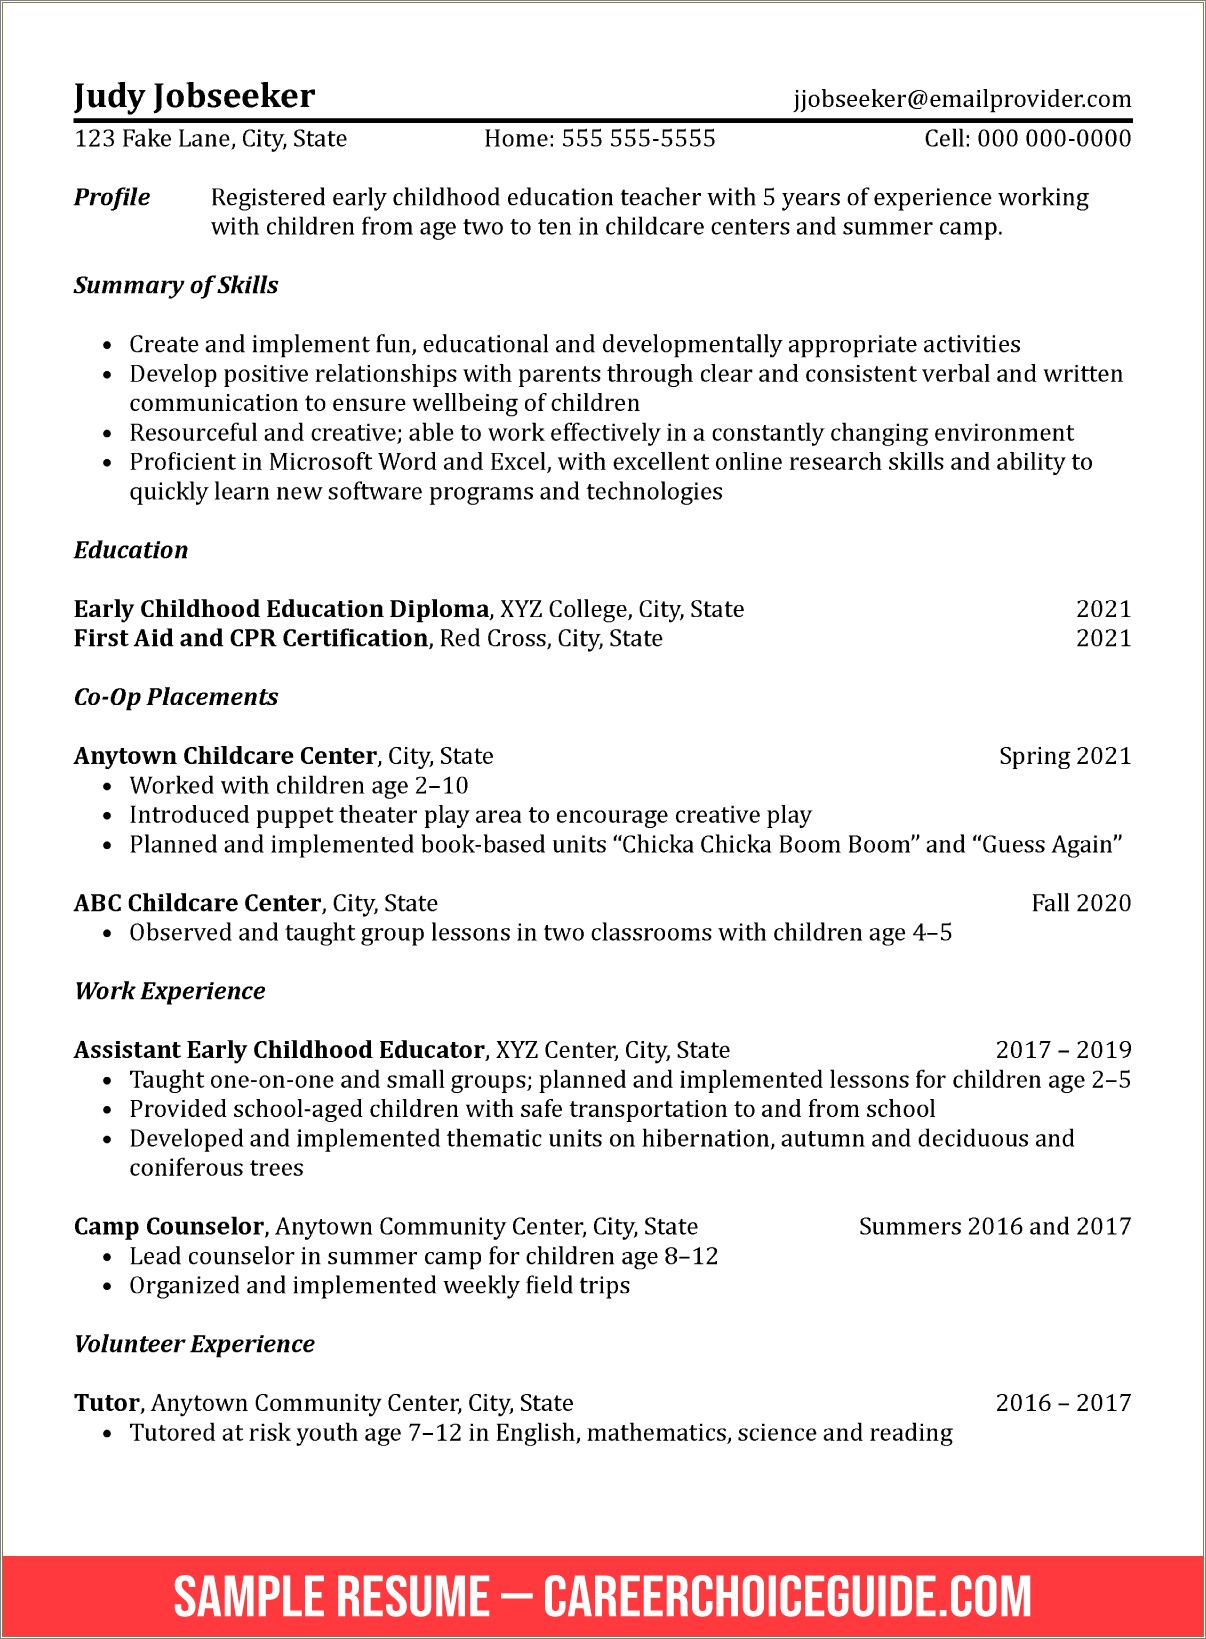 Recent College Graduate Resume Summary Example